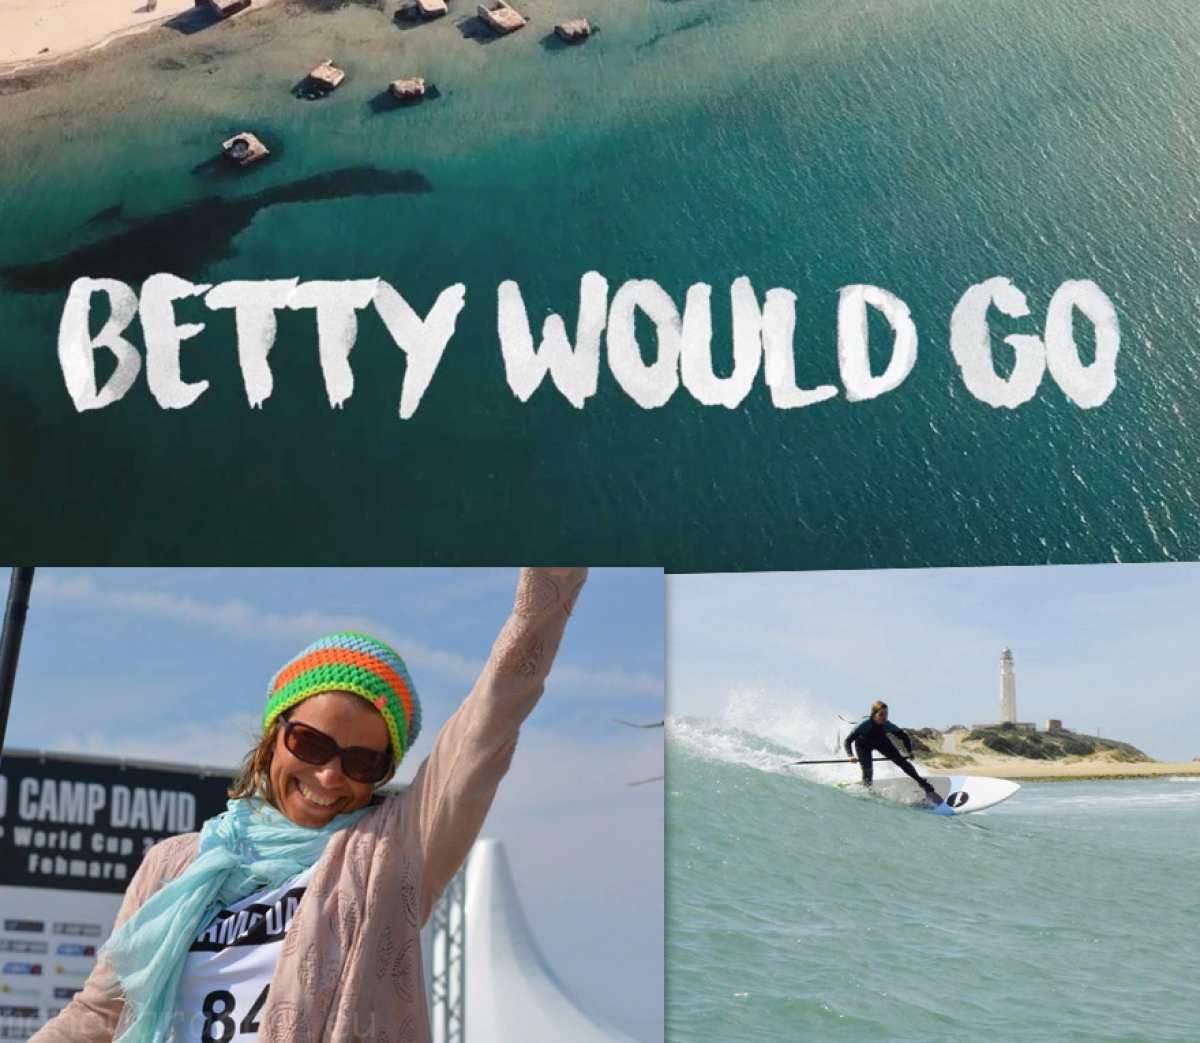 Betty Would Go - Filmdoku-Projekt